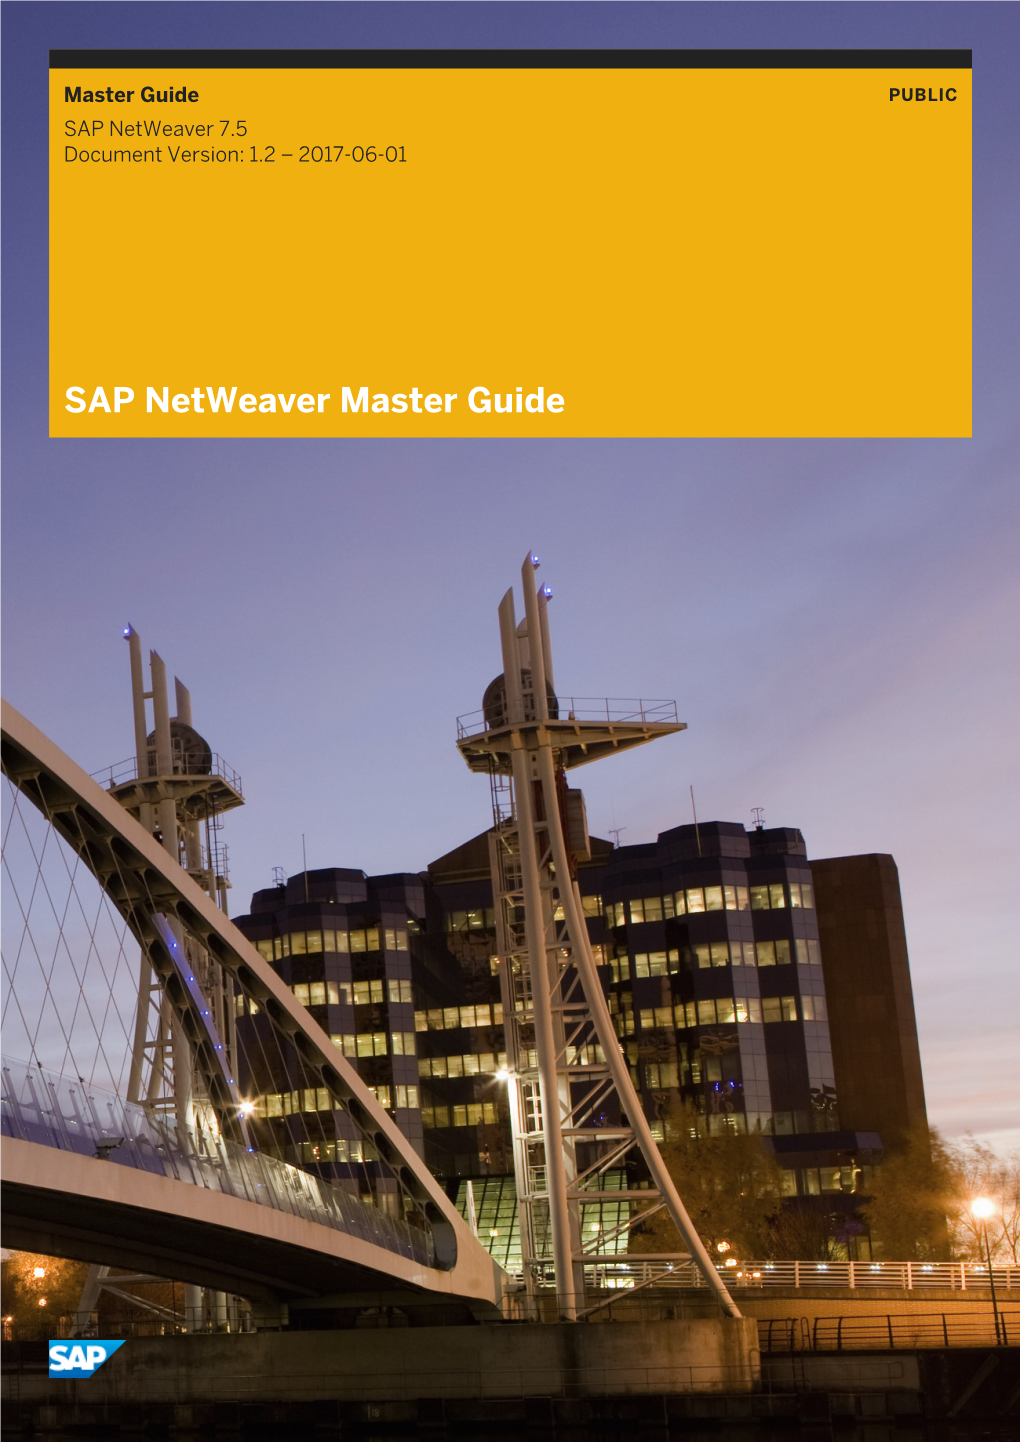 SAP Netweaver Master Guide Content